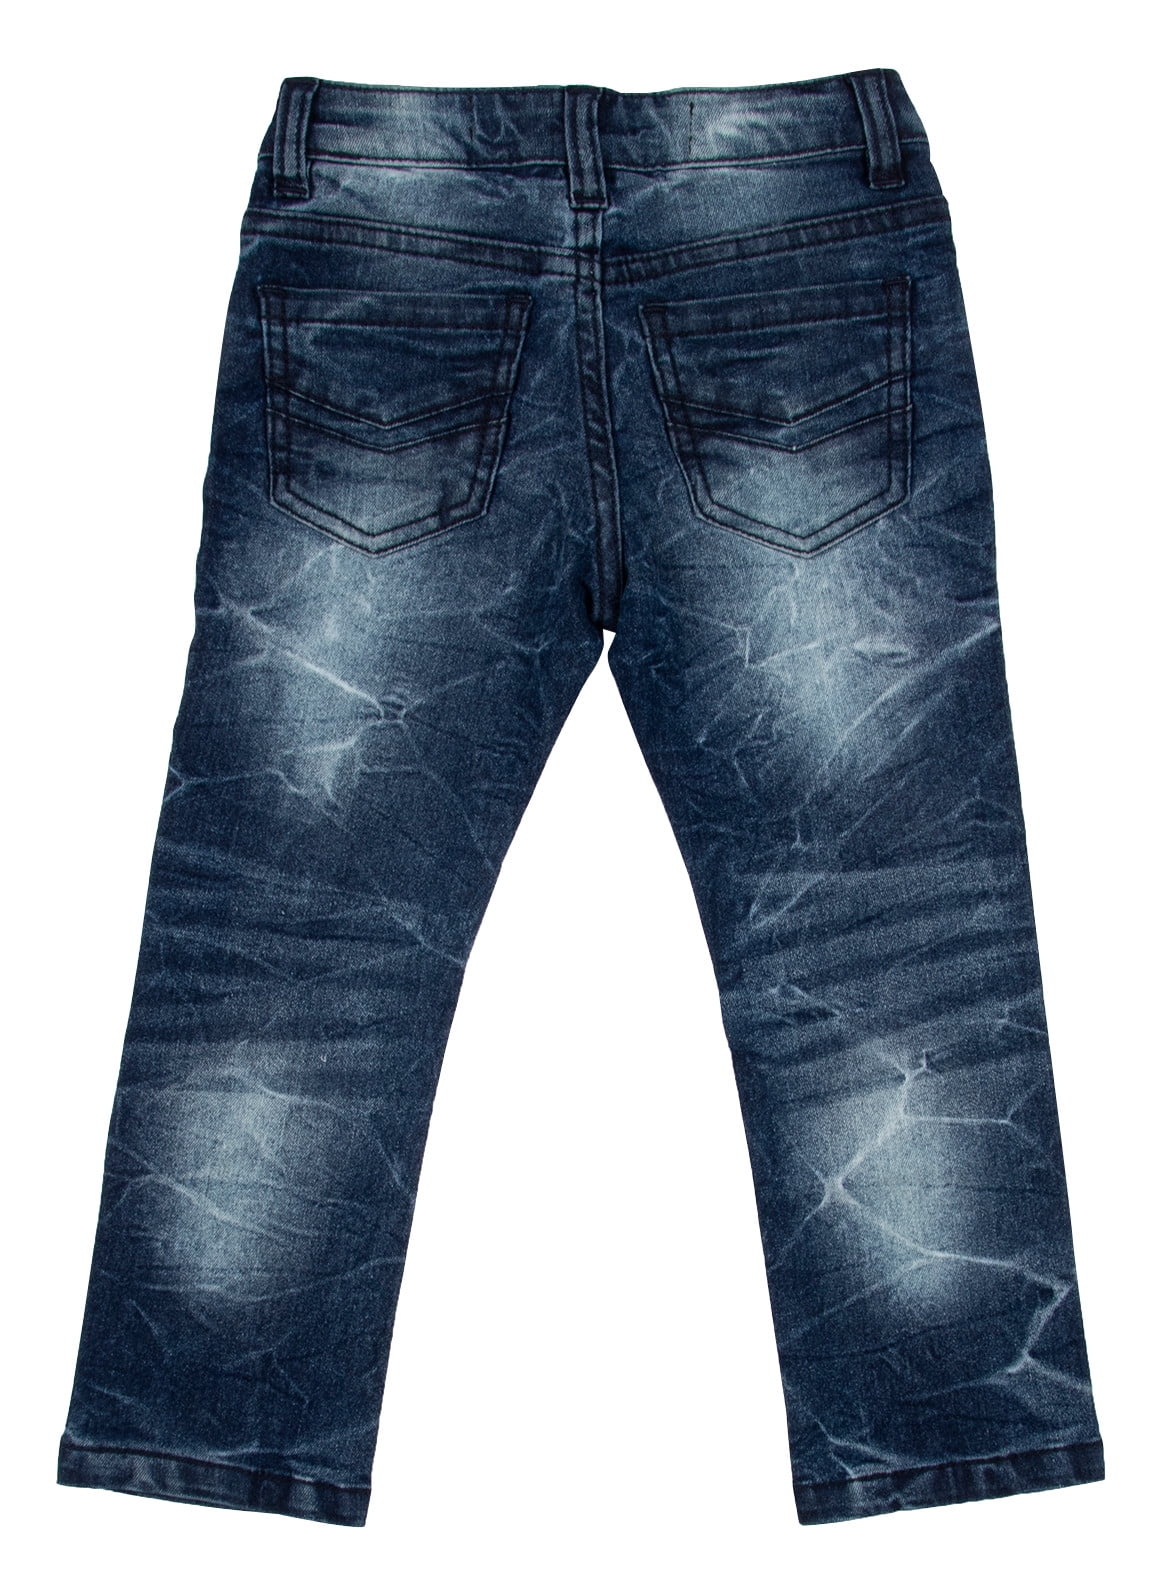 CULTURA Skinny Jeans for Boys Big Boys Teens Slim Wash Denim Pants, Blue  -Thick Stitch, Size 12